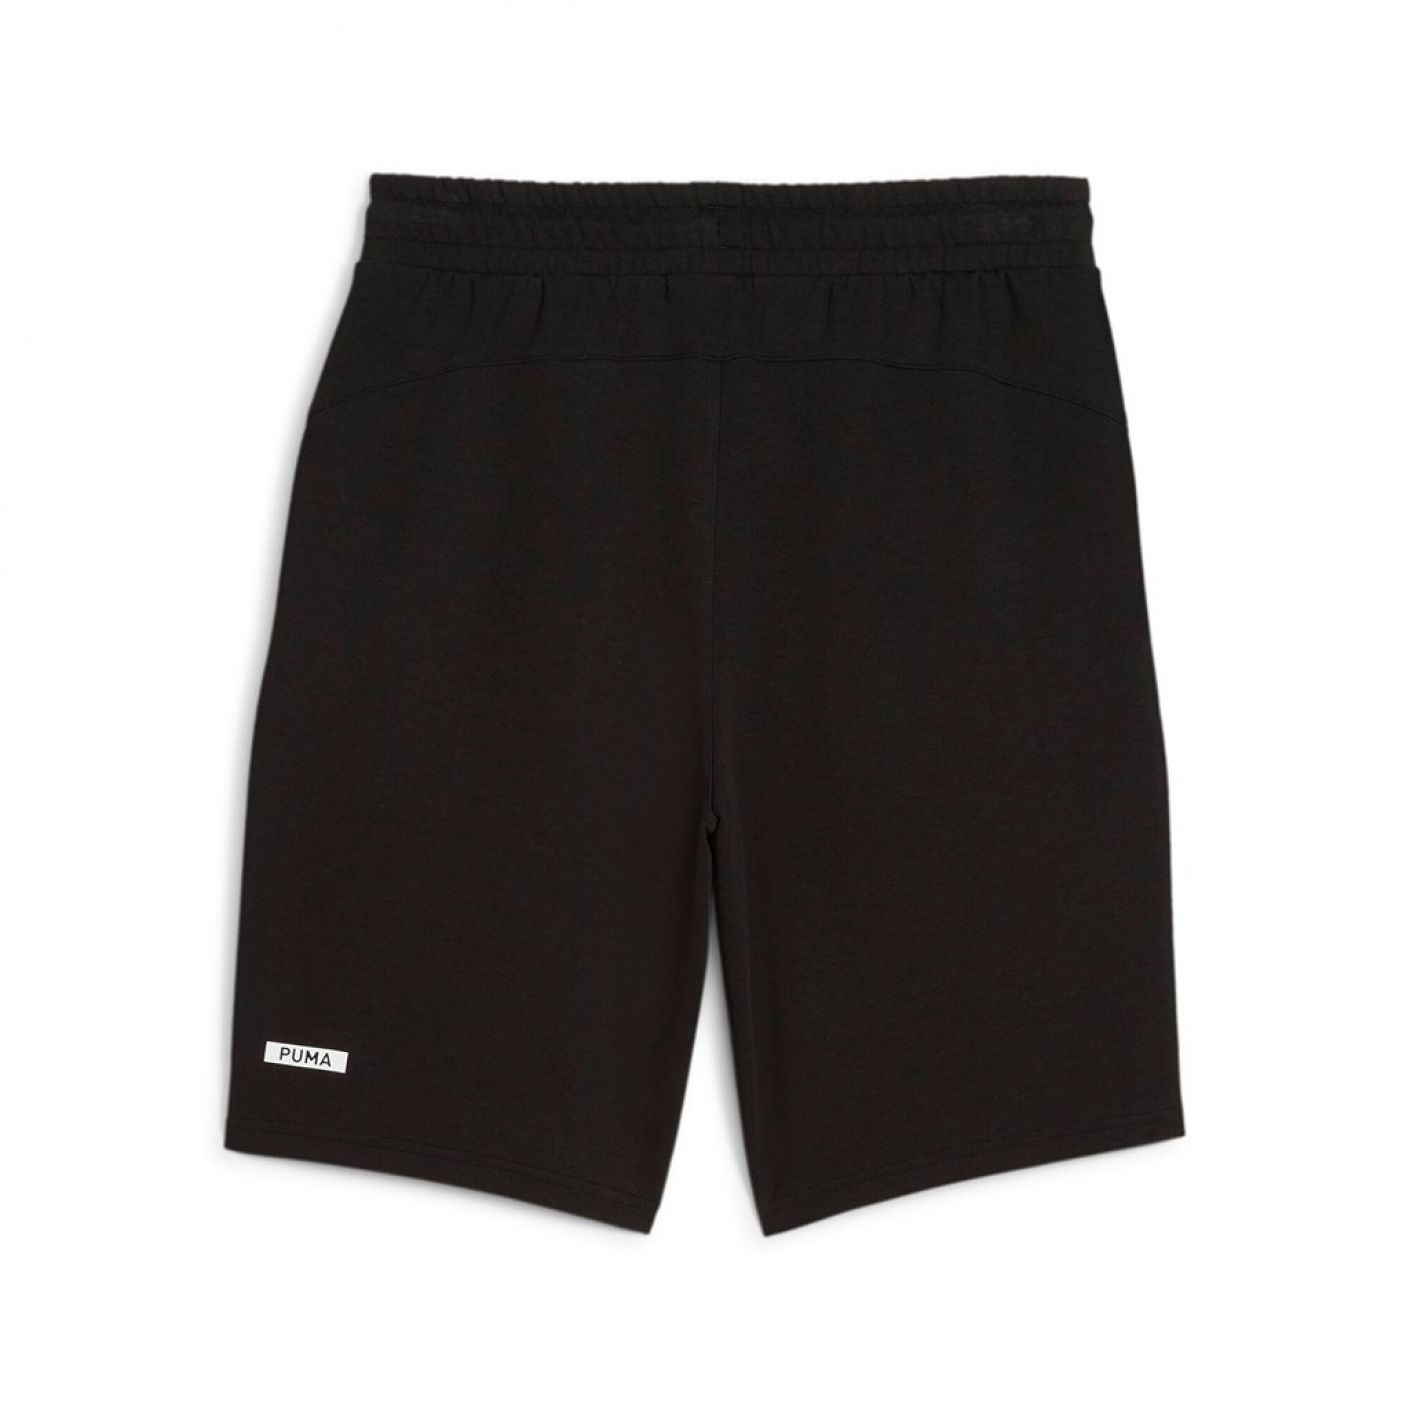 Puma Short Rad/Cal shorts Black da Uomo